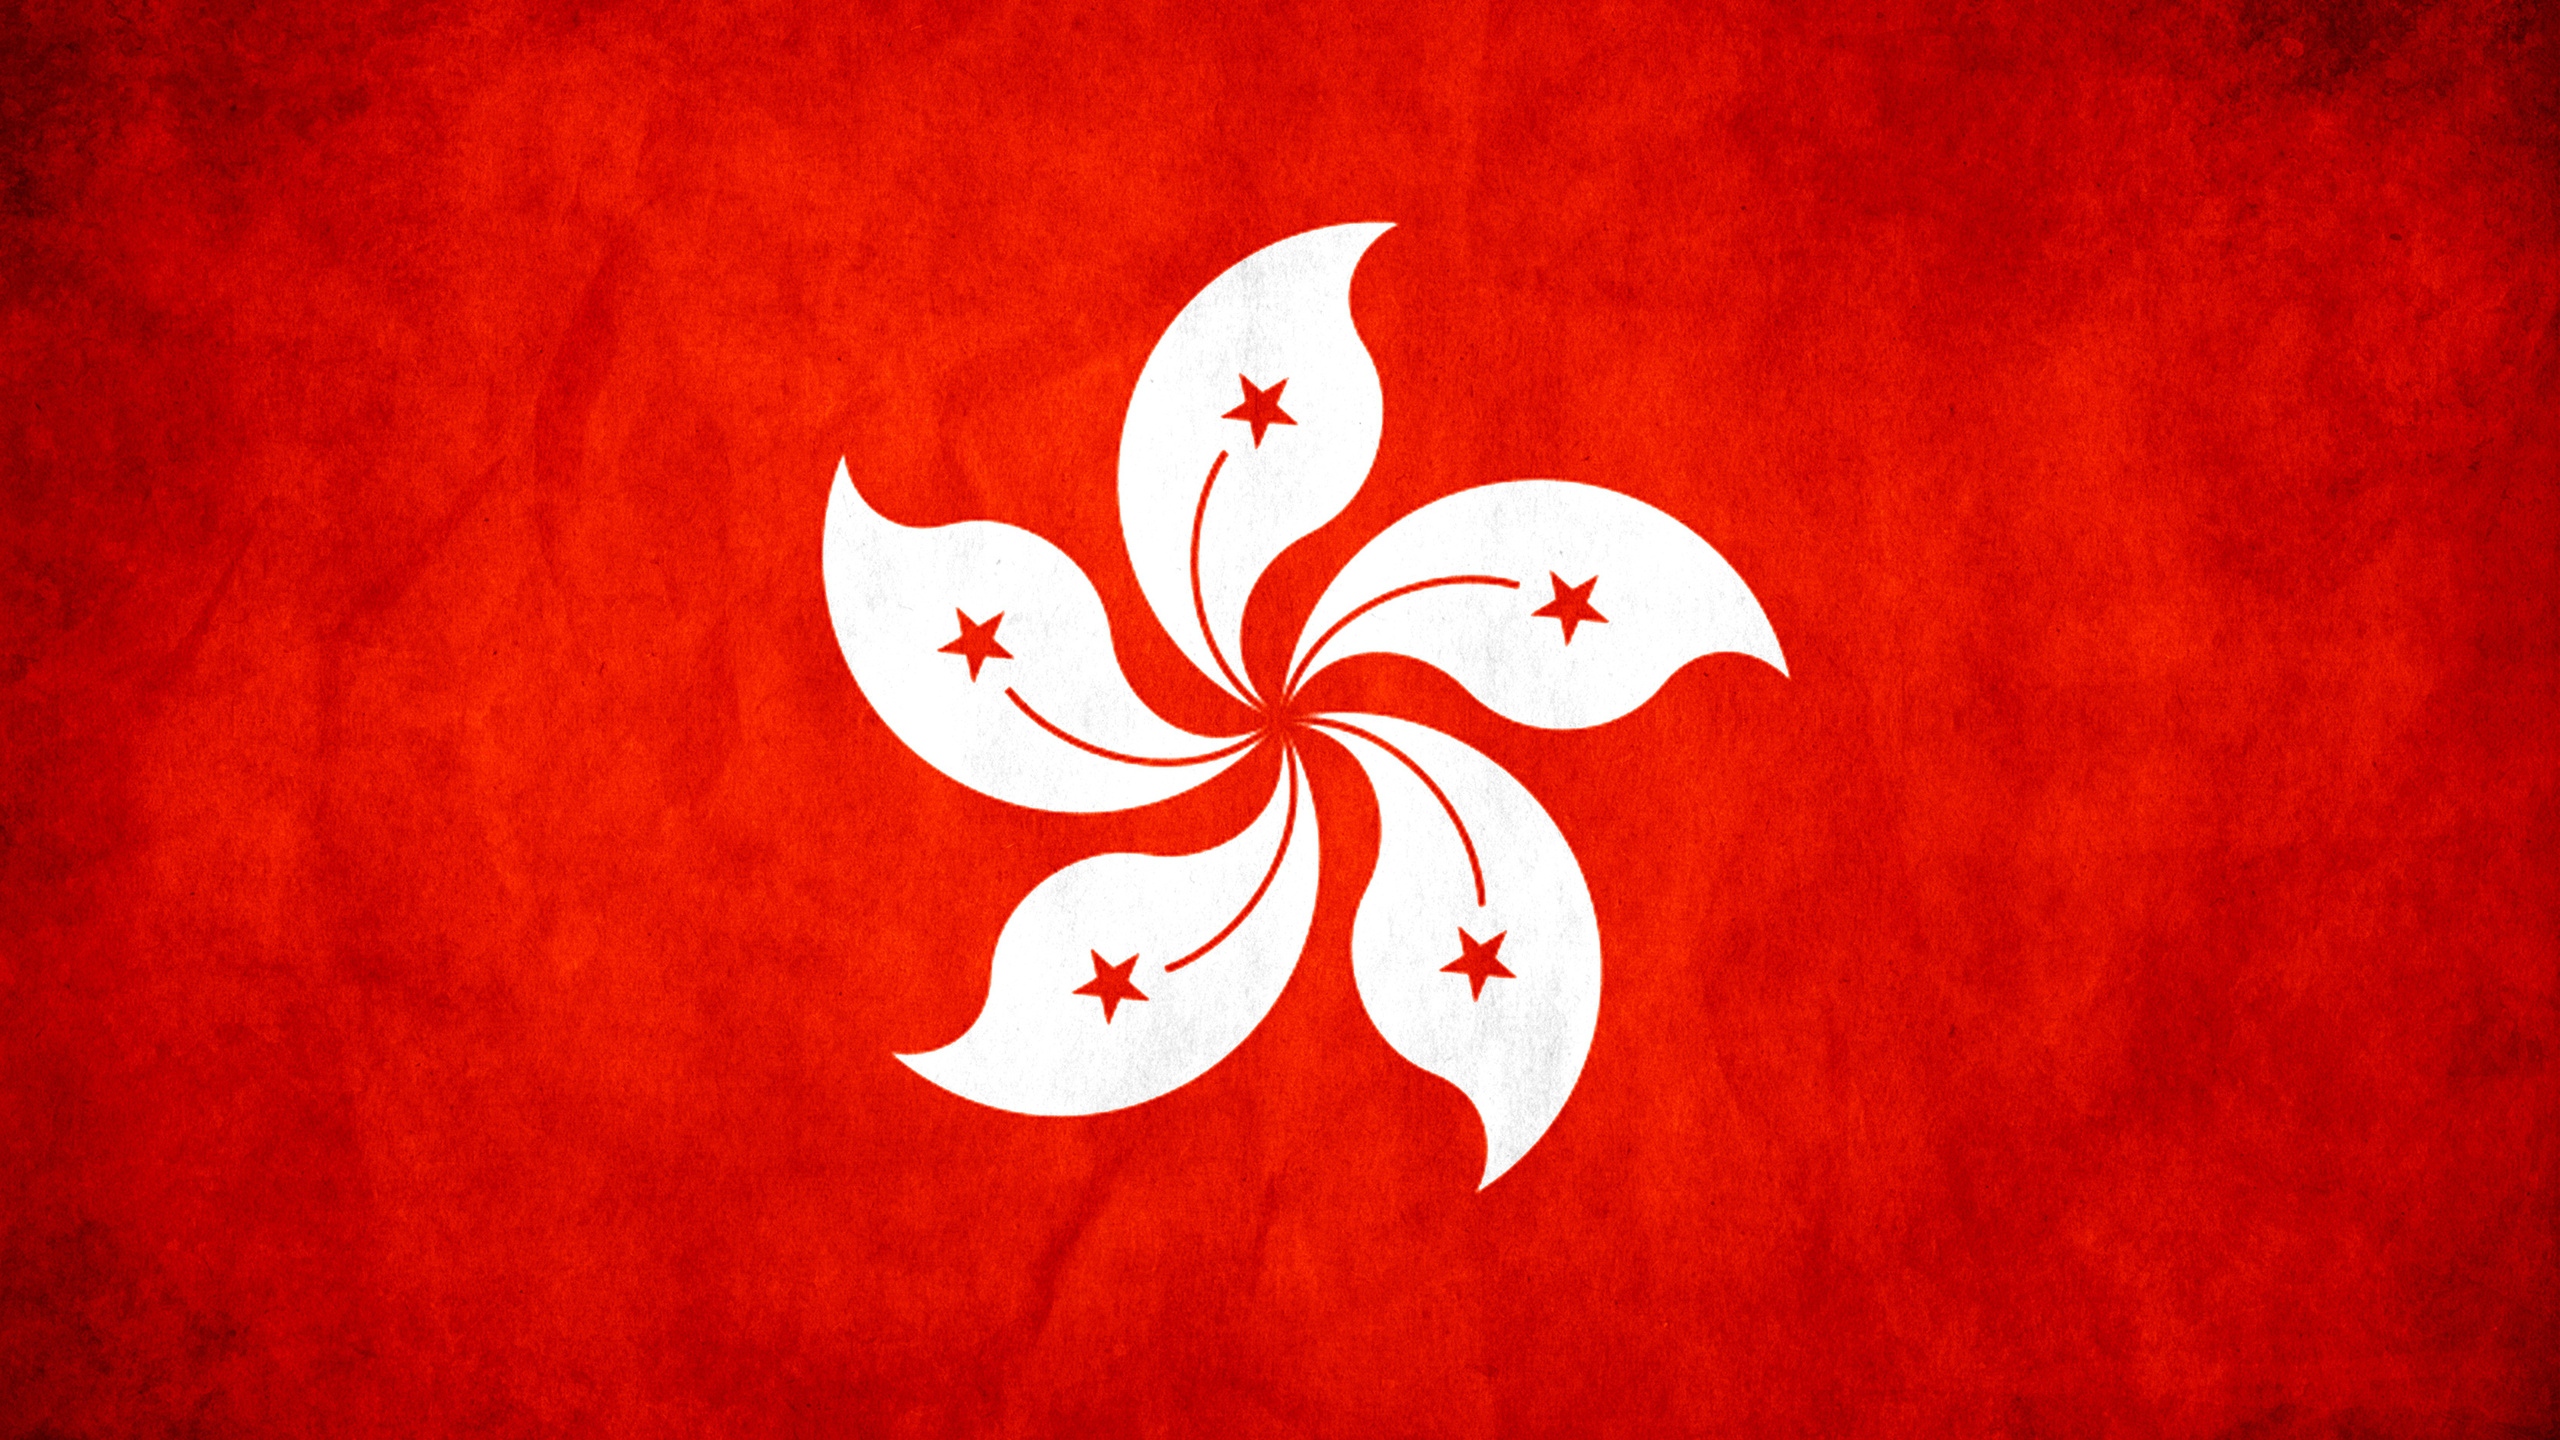 Hong Kong Flag Wallpaper Background HD 52194 2560x1440px